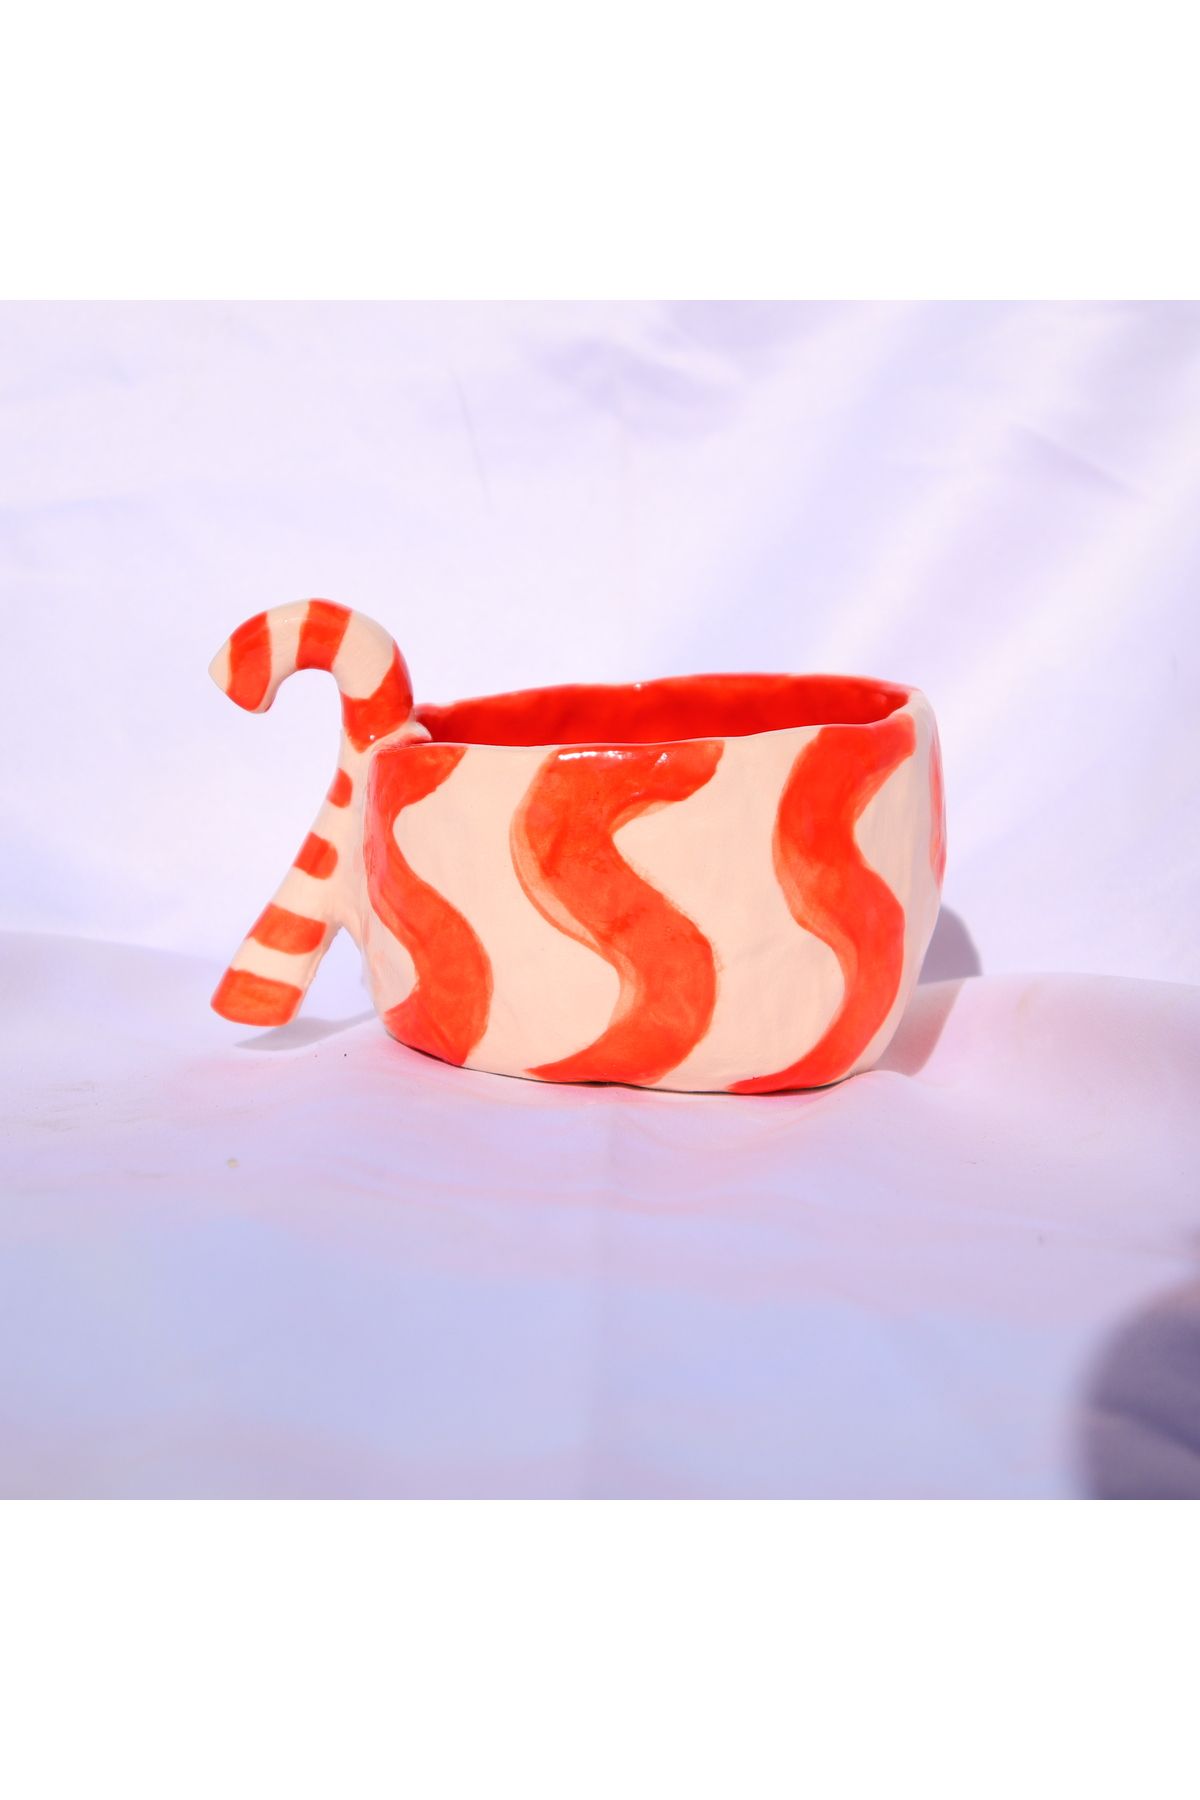 Lily & Loly Ceramics Yılbaşı Serisi “lollipop” Xl Kupa - Kırmızı Şekerli Kupa - El Yapımı Seramik Mug 200 Ml